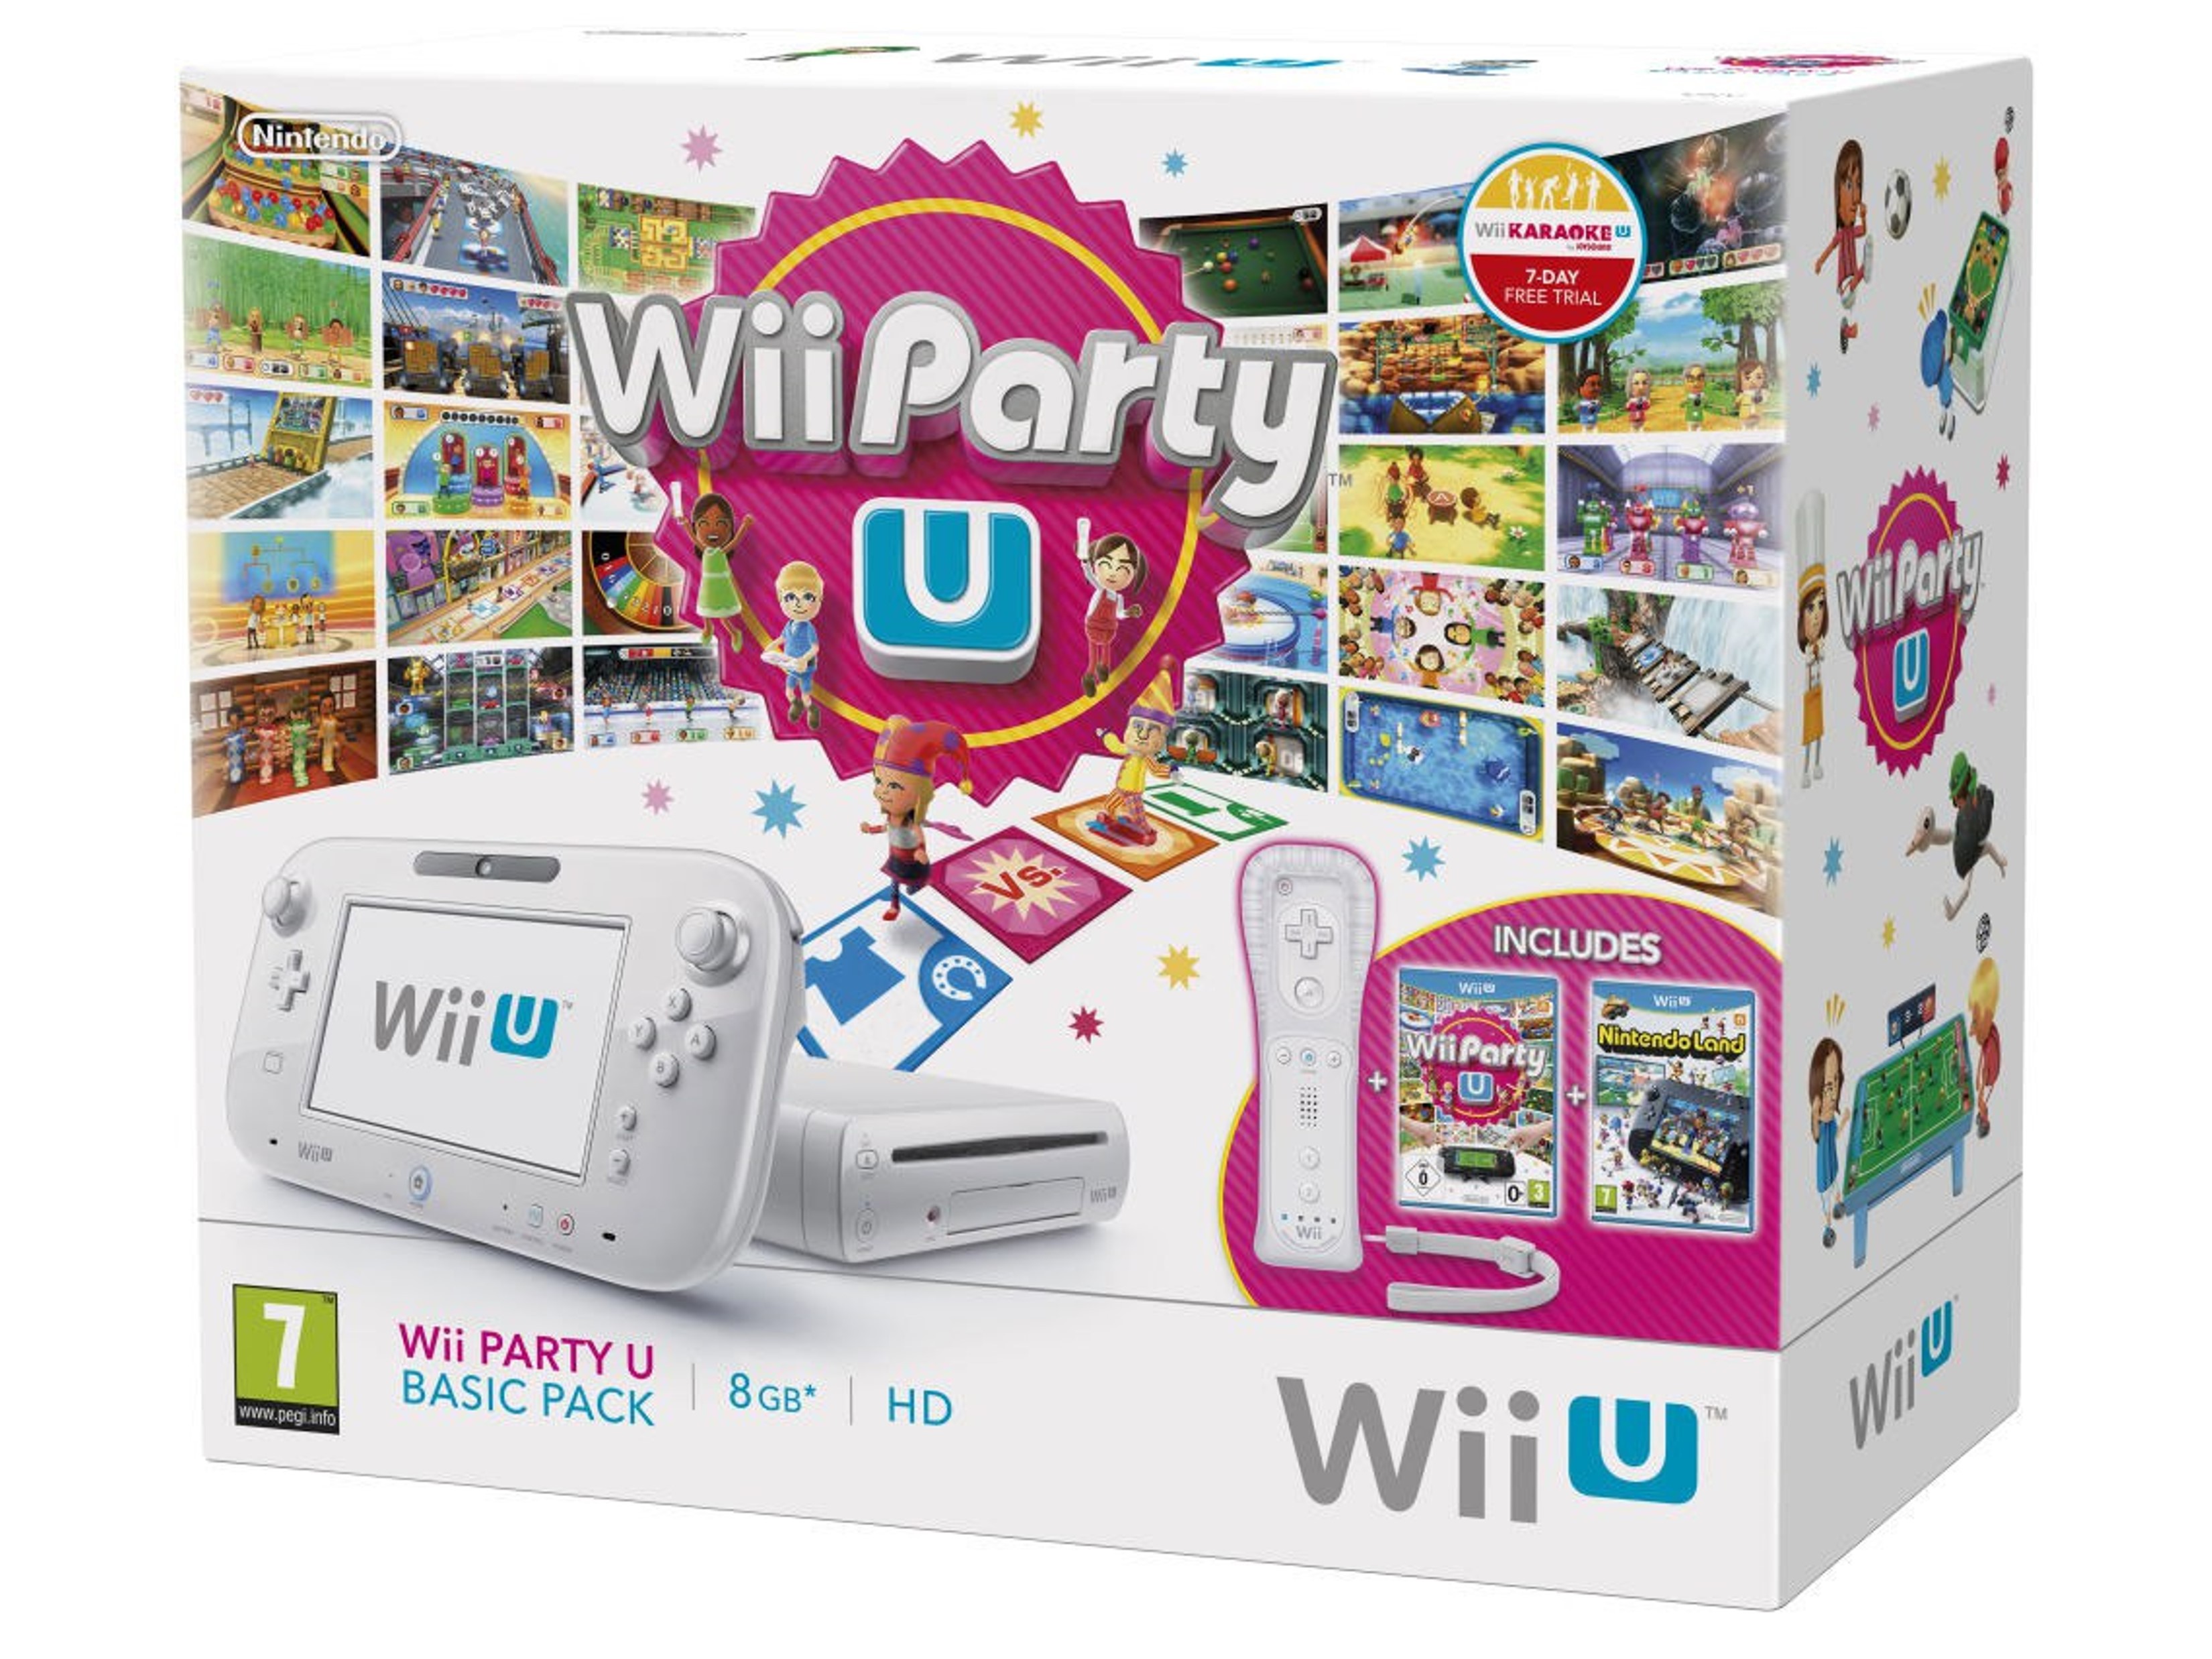 Nintendo Wii U Starter Pack - Wii Party U Edition [Complete] - Wii U Hardware